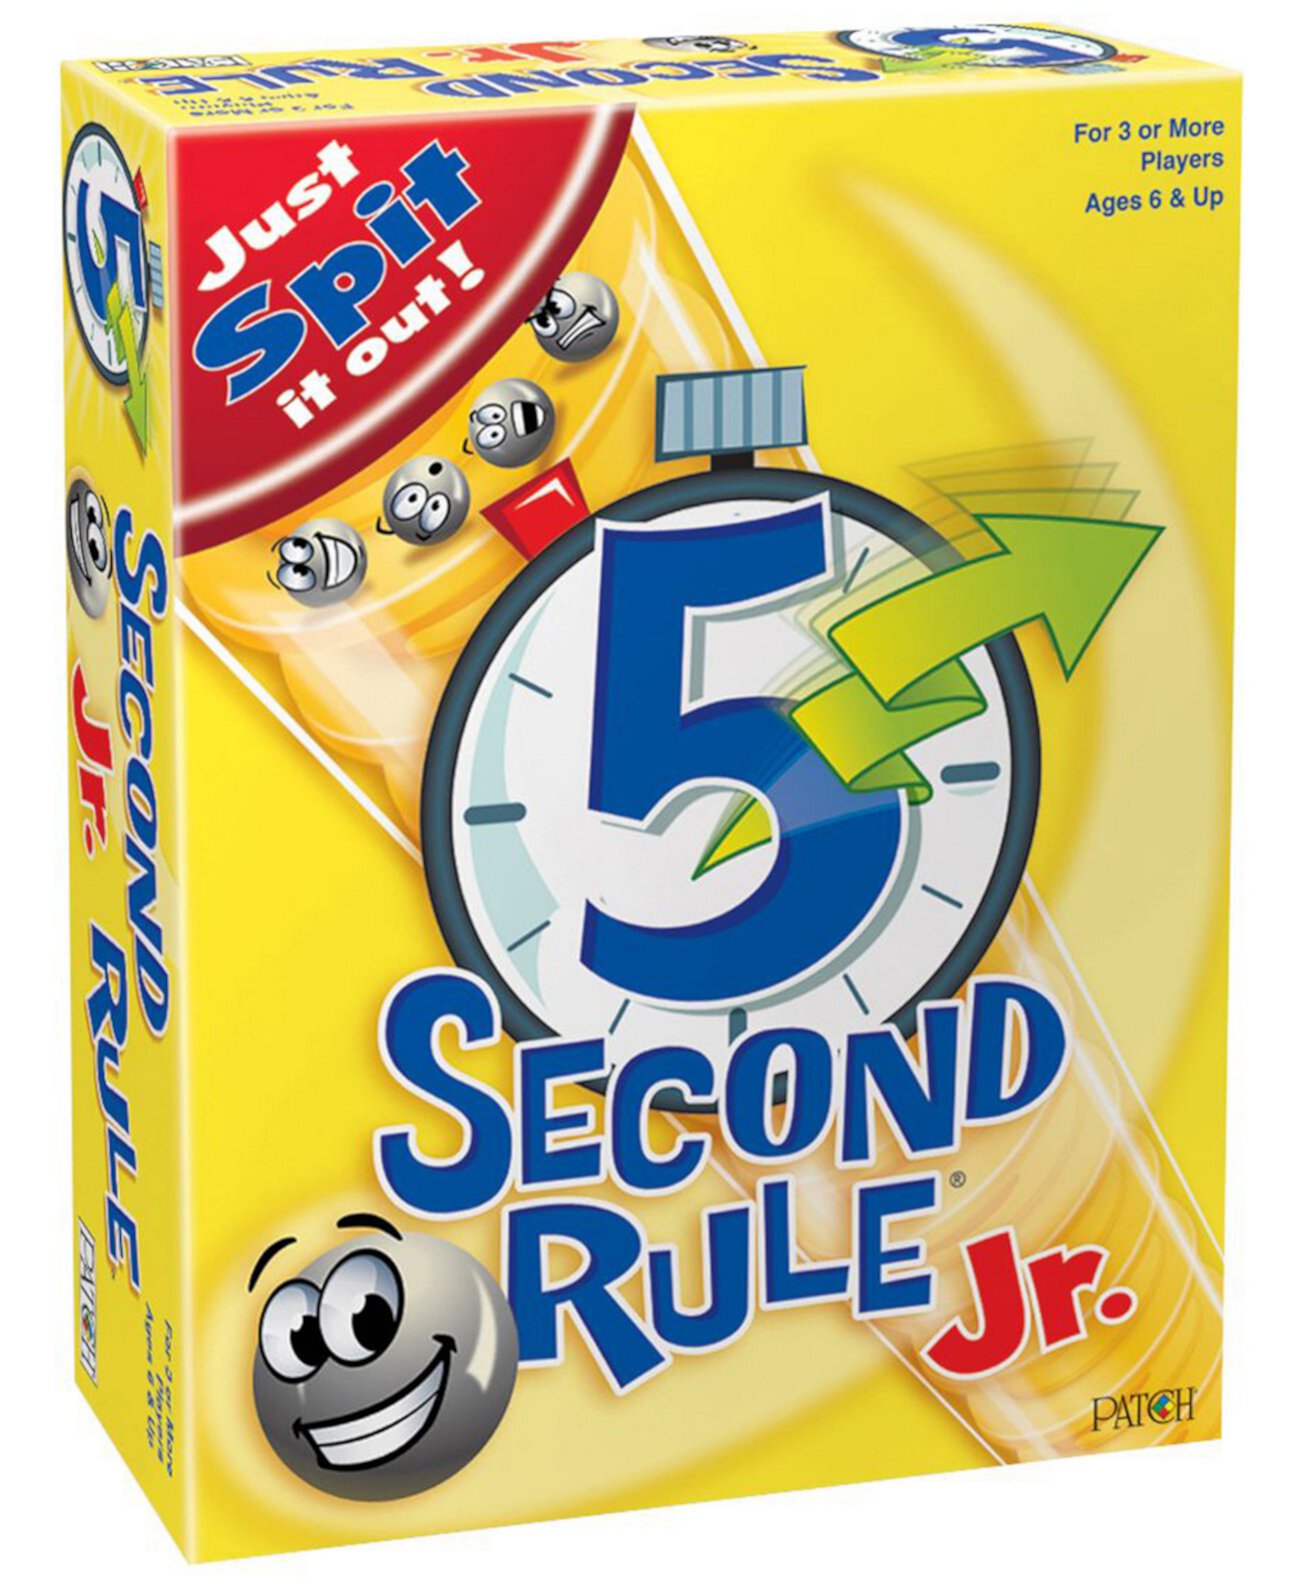 Second rule. 5 Seconds игра. 5 Second Rule. 5 Second Rule game. Карточки для игры 5 second Rule.